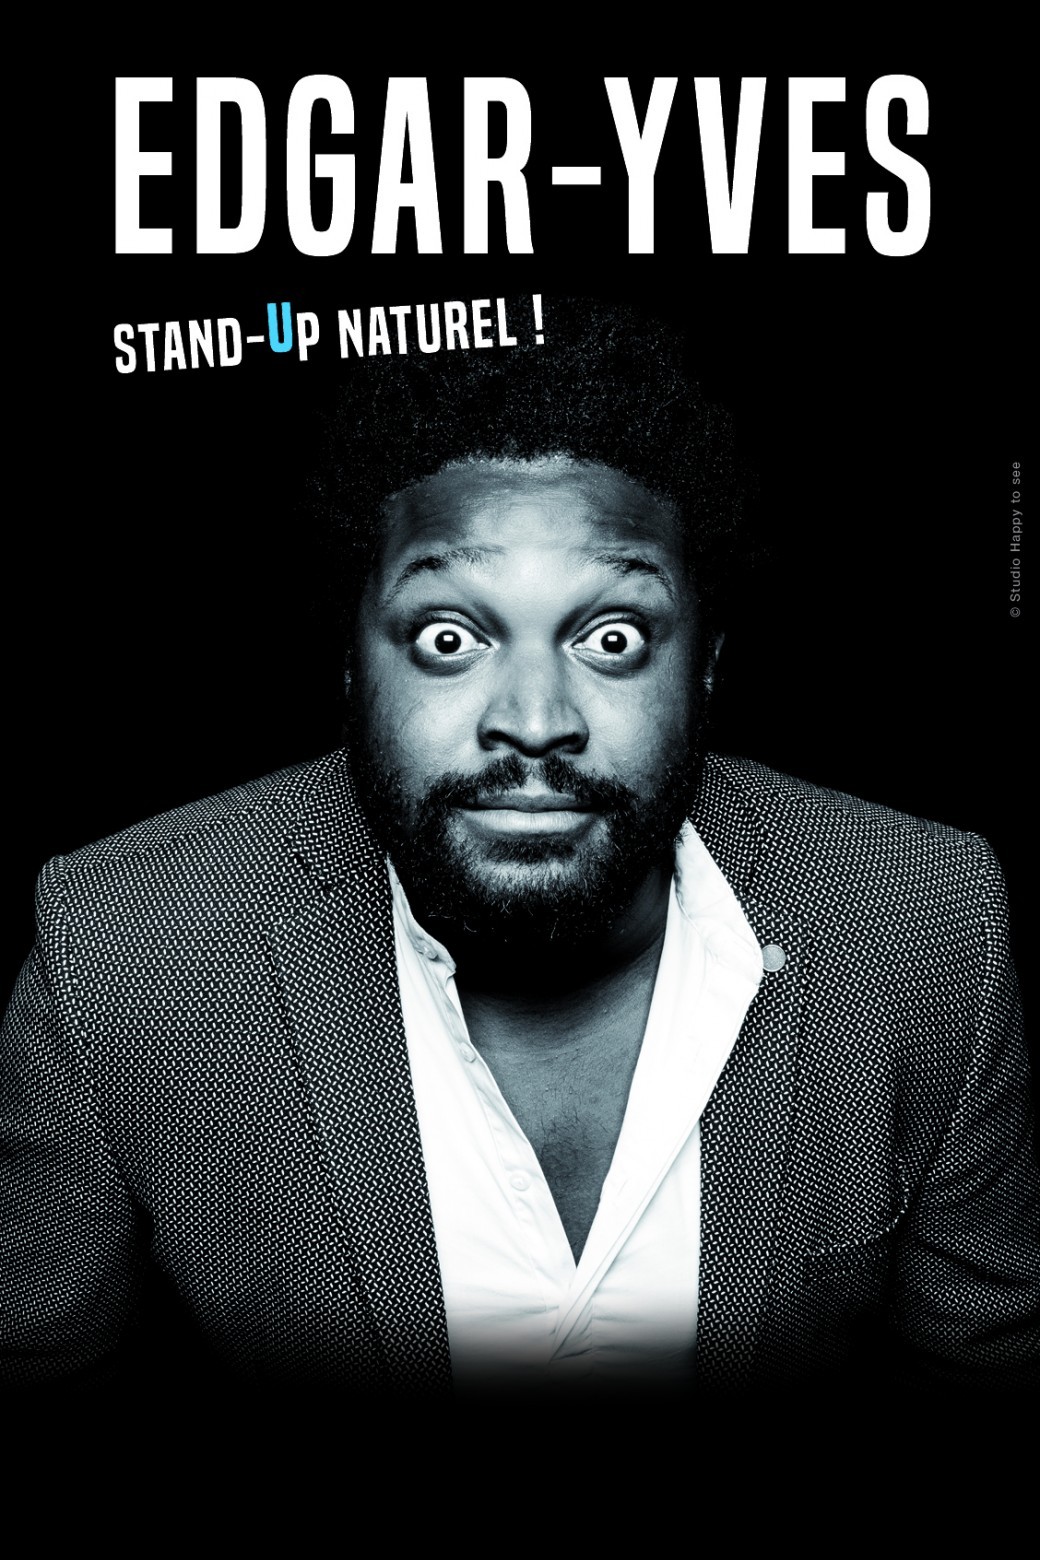 Edgar-Yves dans "Stand-up naturel"